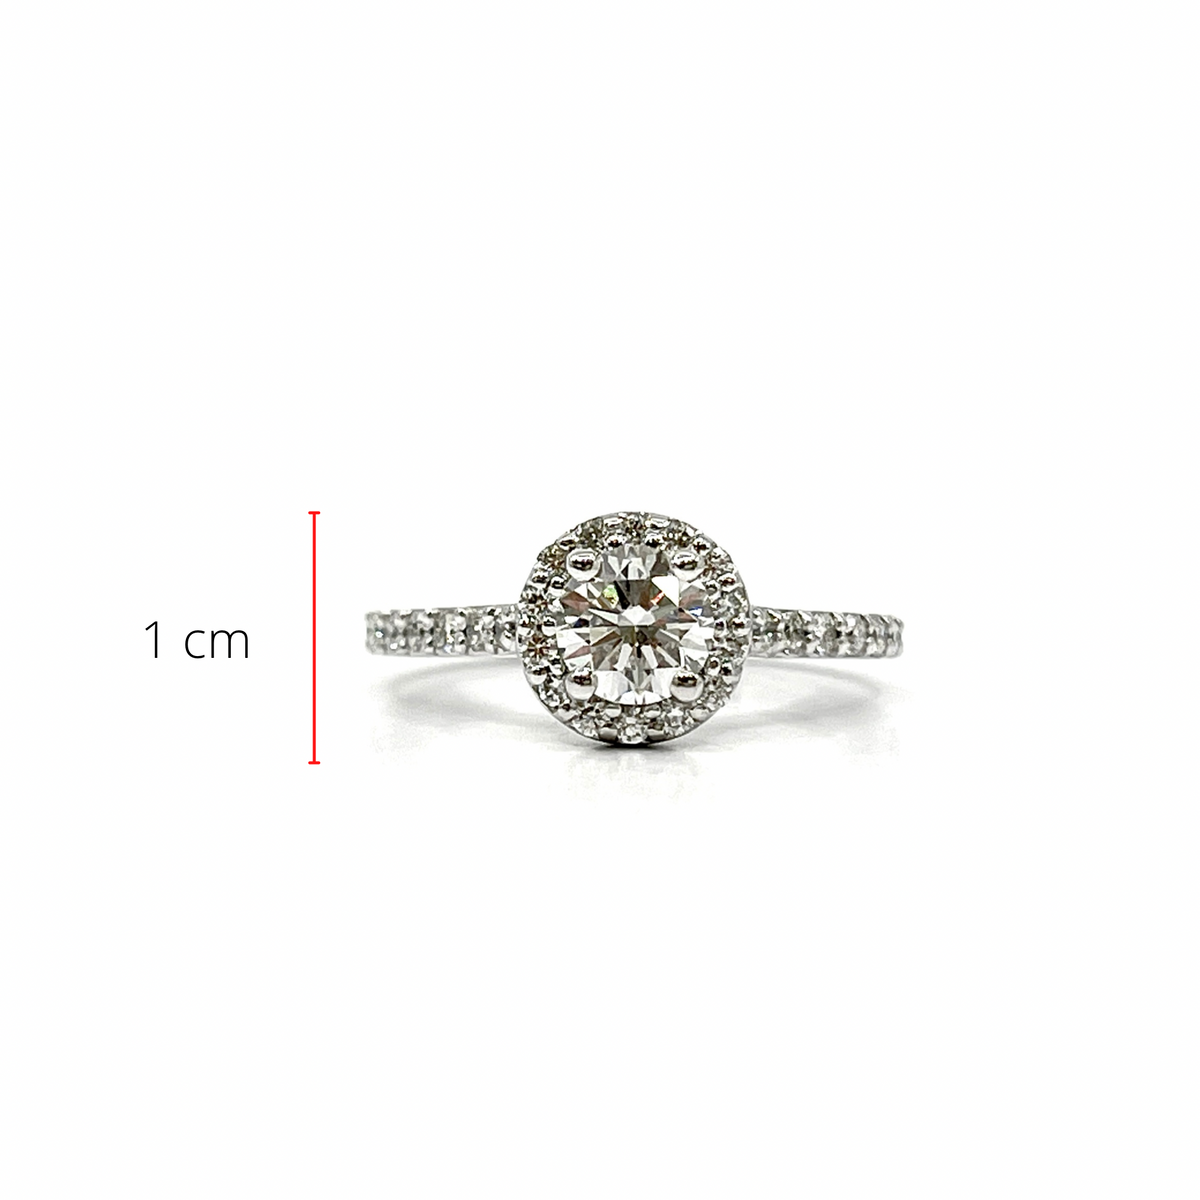 14K White Gold 1.16cttw Diamond Halo Engagement Ring - Size 6.5